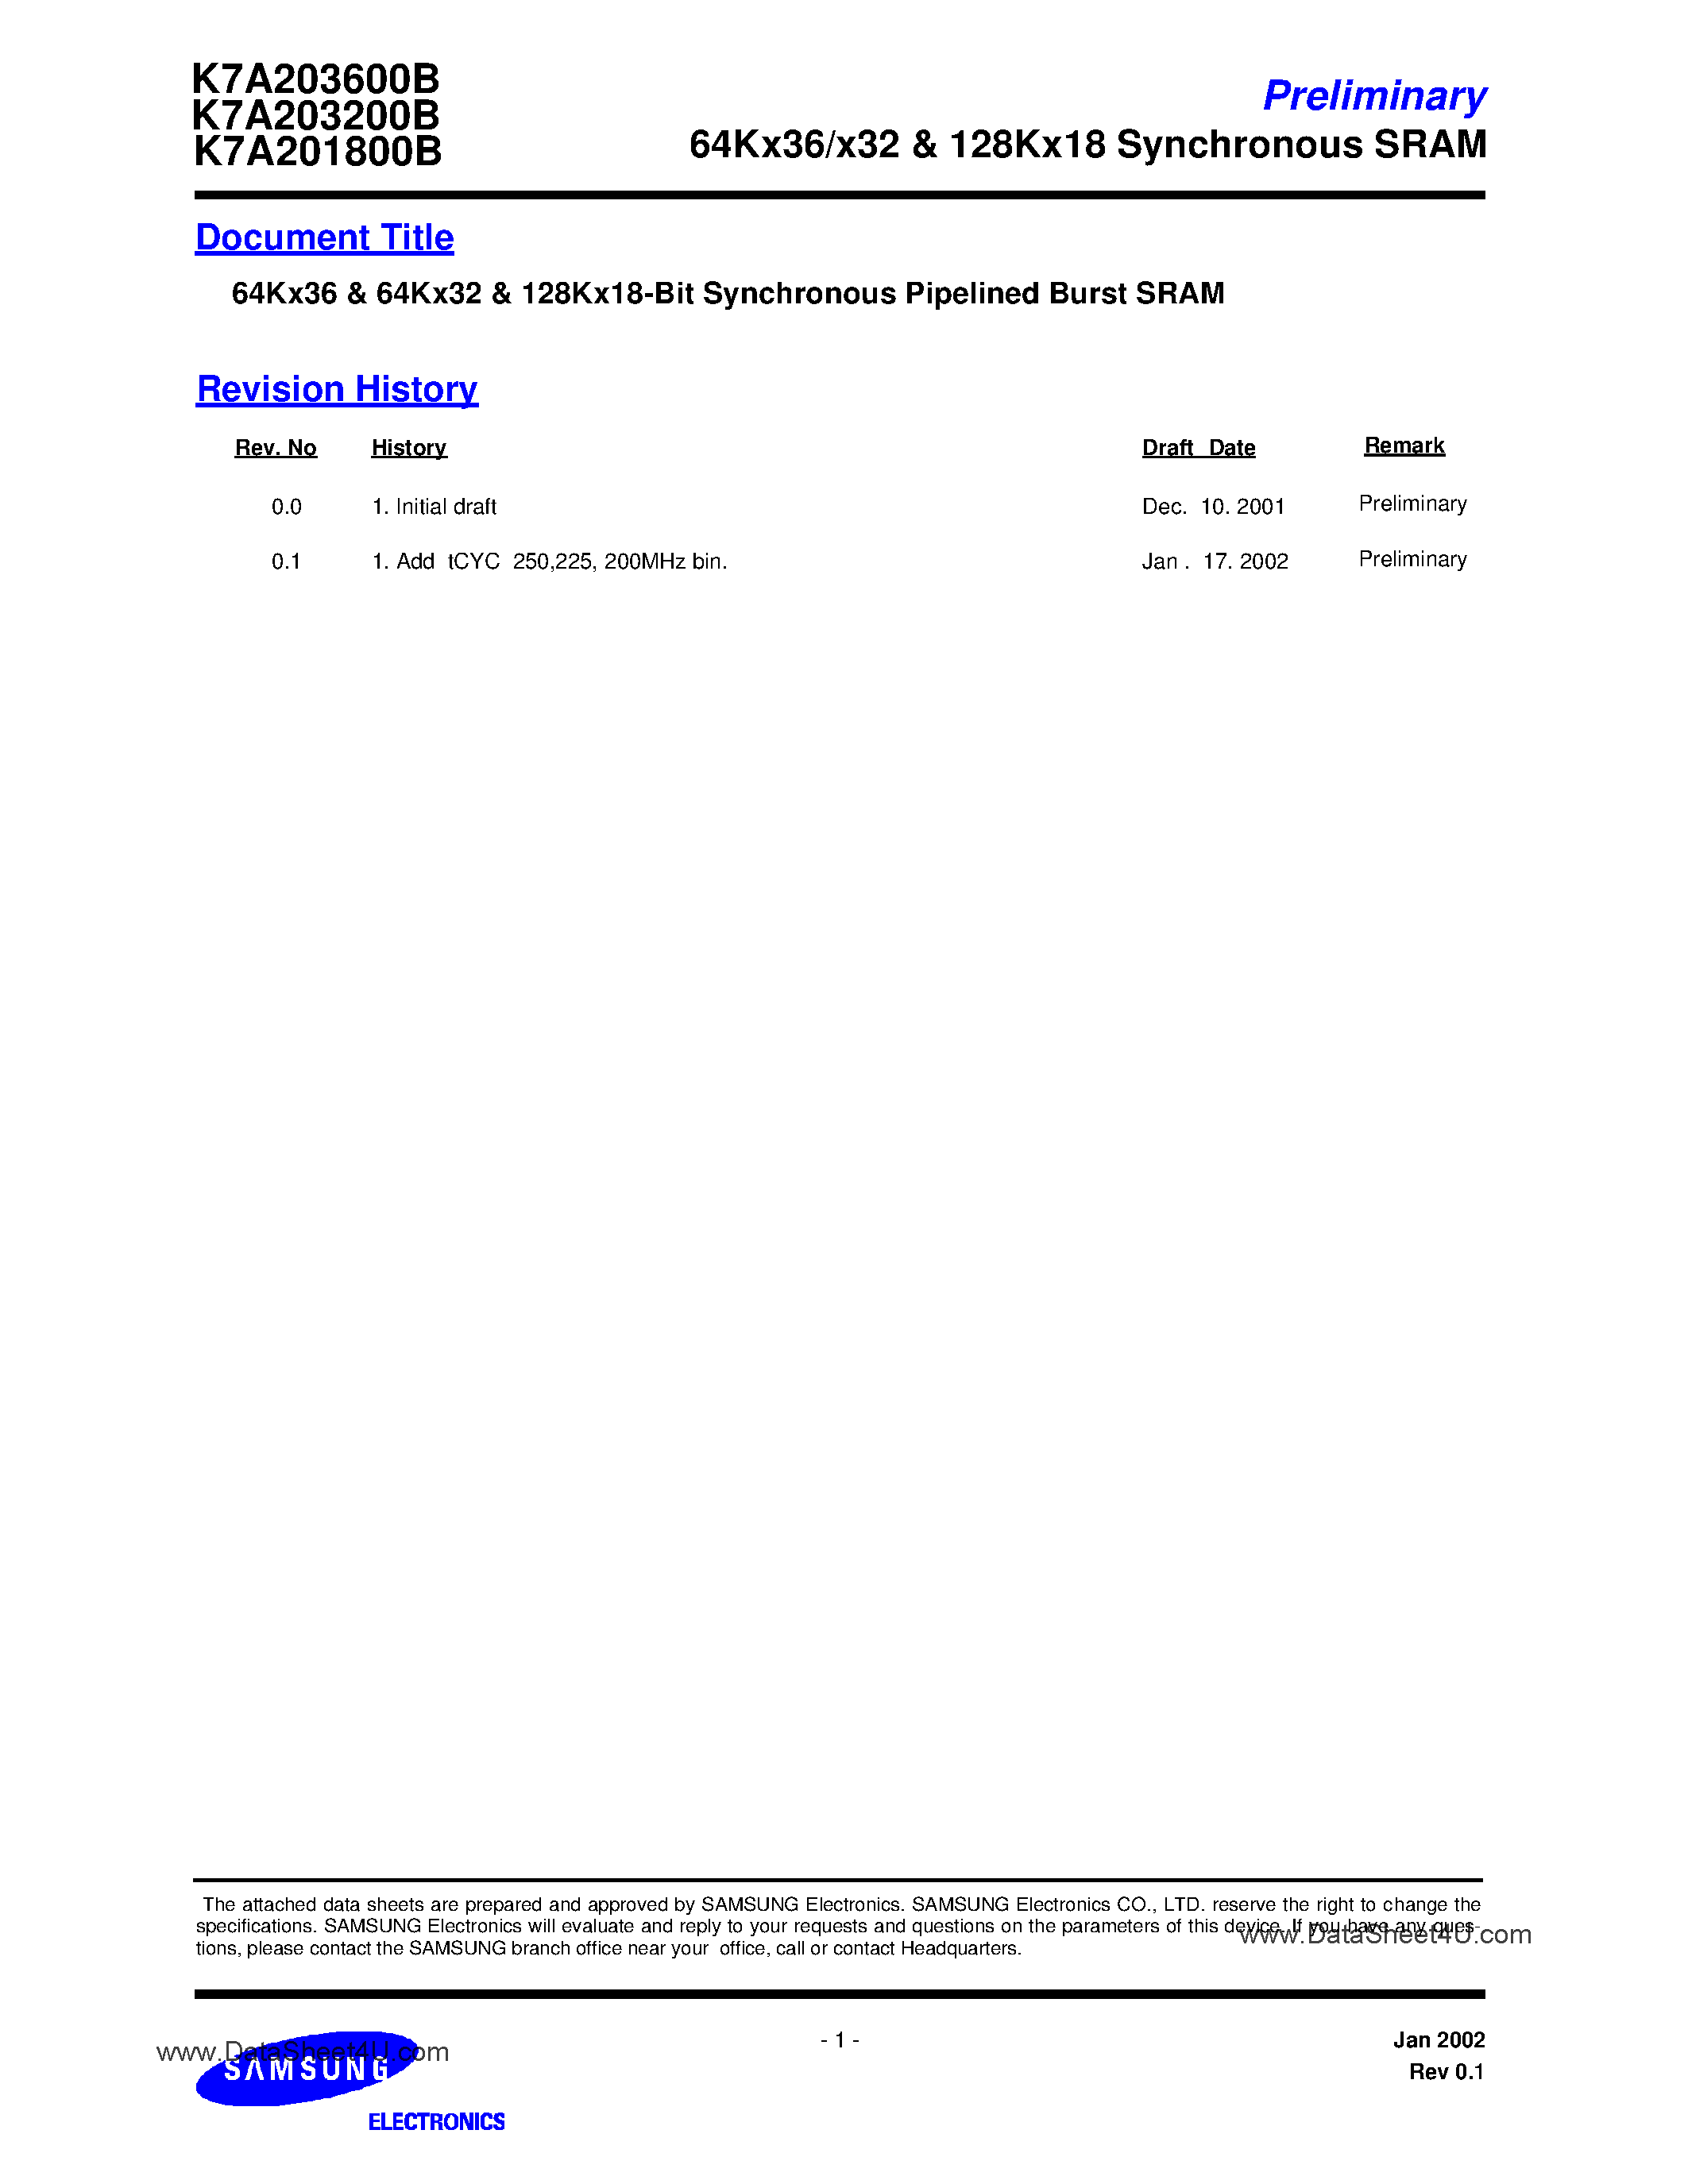 Datasheet K7A203200B-QC(I)14 - 64Kx36 & 64Kx32-Bit Synchronous Pipelined Burst SRAM page 1